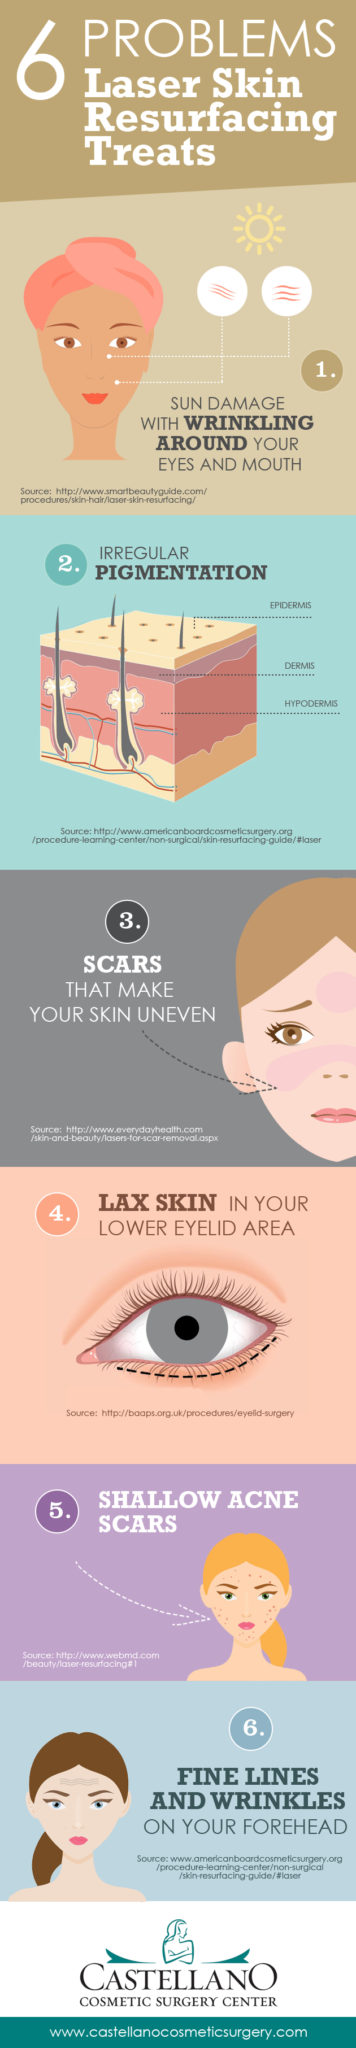 6 Problems Laser Skin Resurfacing Treats [Infographic] img 1